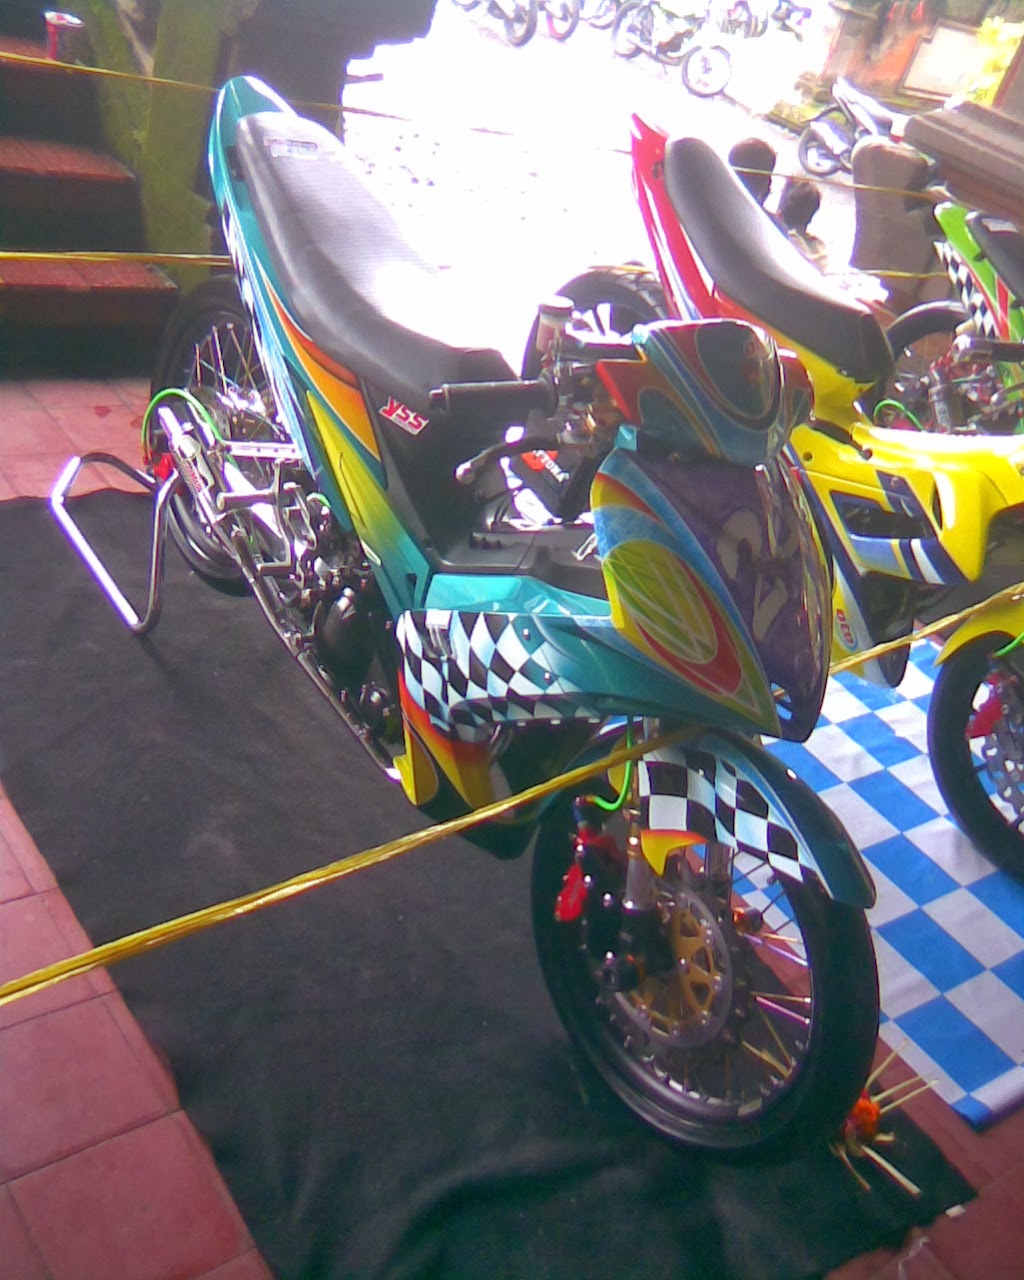 Kumpulan Modifikasi Motor Jupiter Mx Di Bali Terbaru Dunia Motor